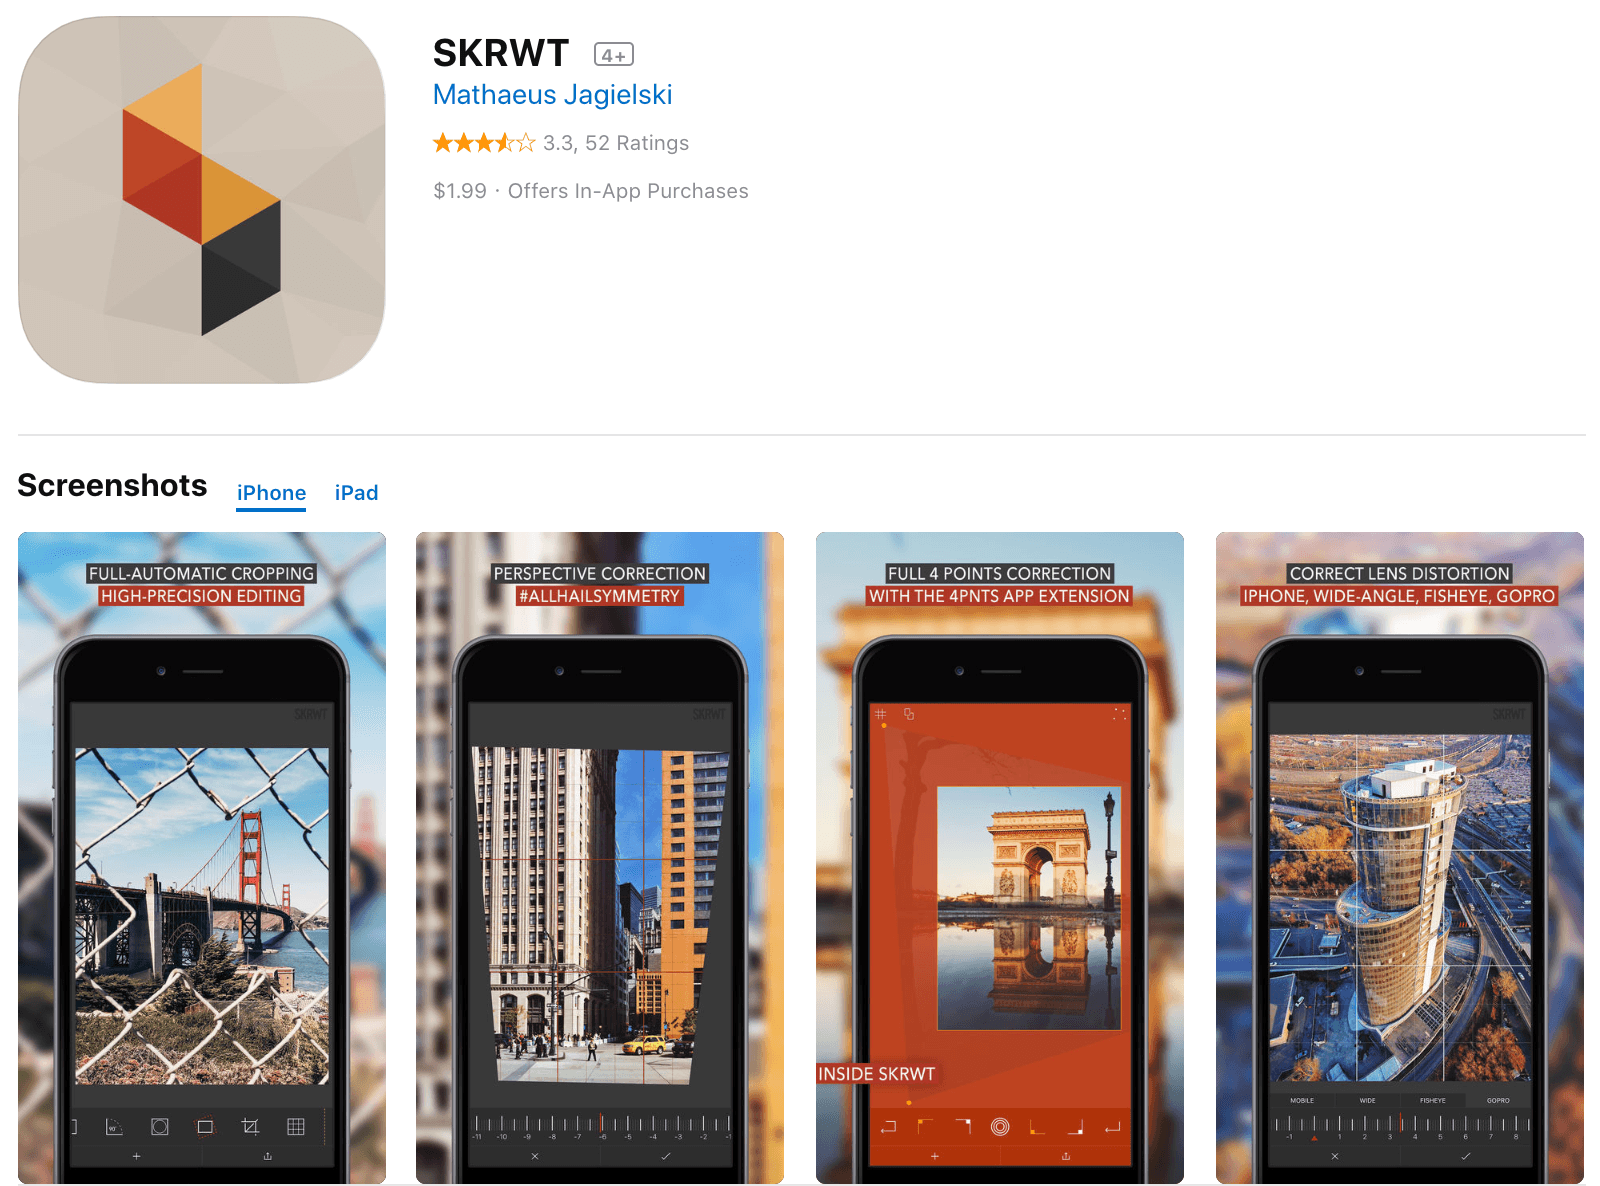 SKRWT Picture Editing App